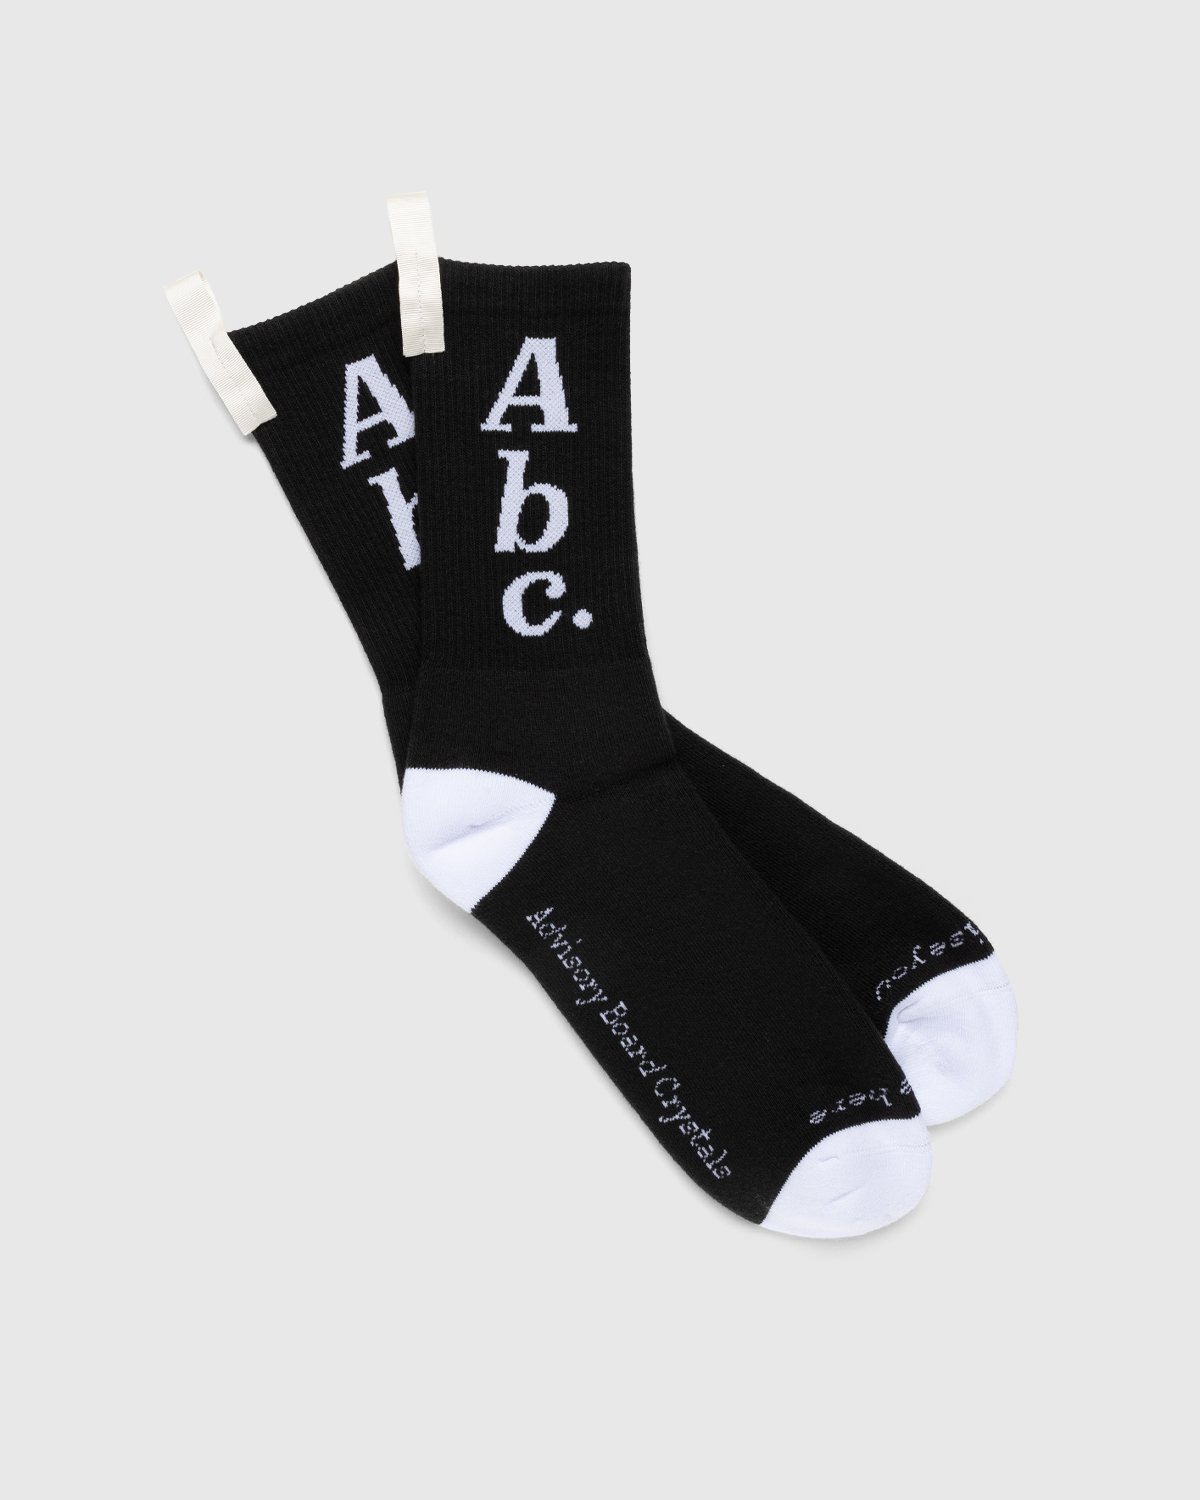 Abc. - Crew Socks Anthracite - Accessories - Black - Image 1